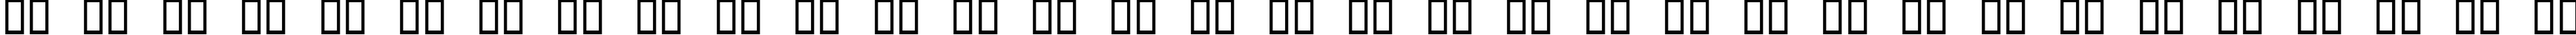 Пример написания русского алфавита шрифтом KacstOneFixed